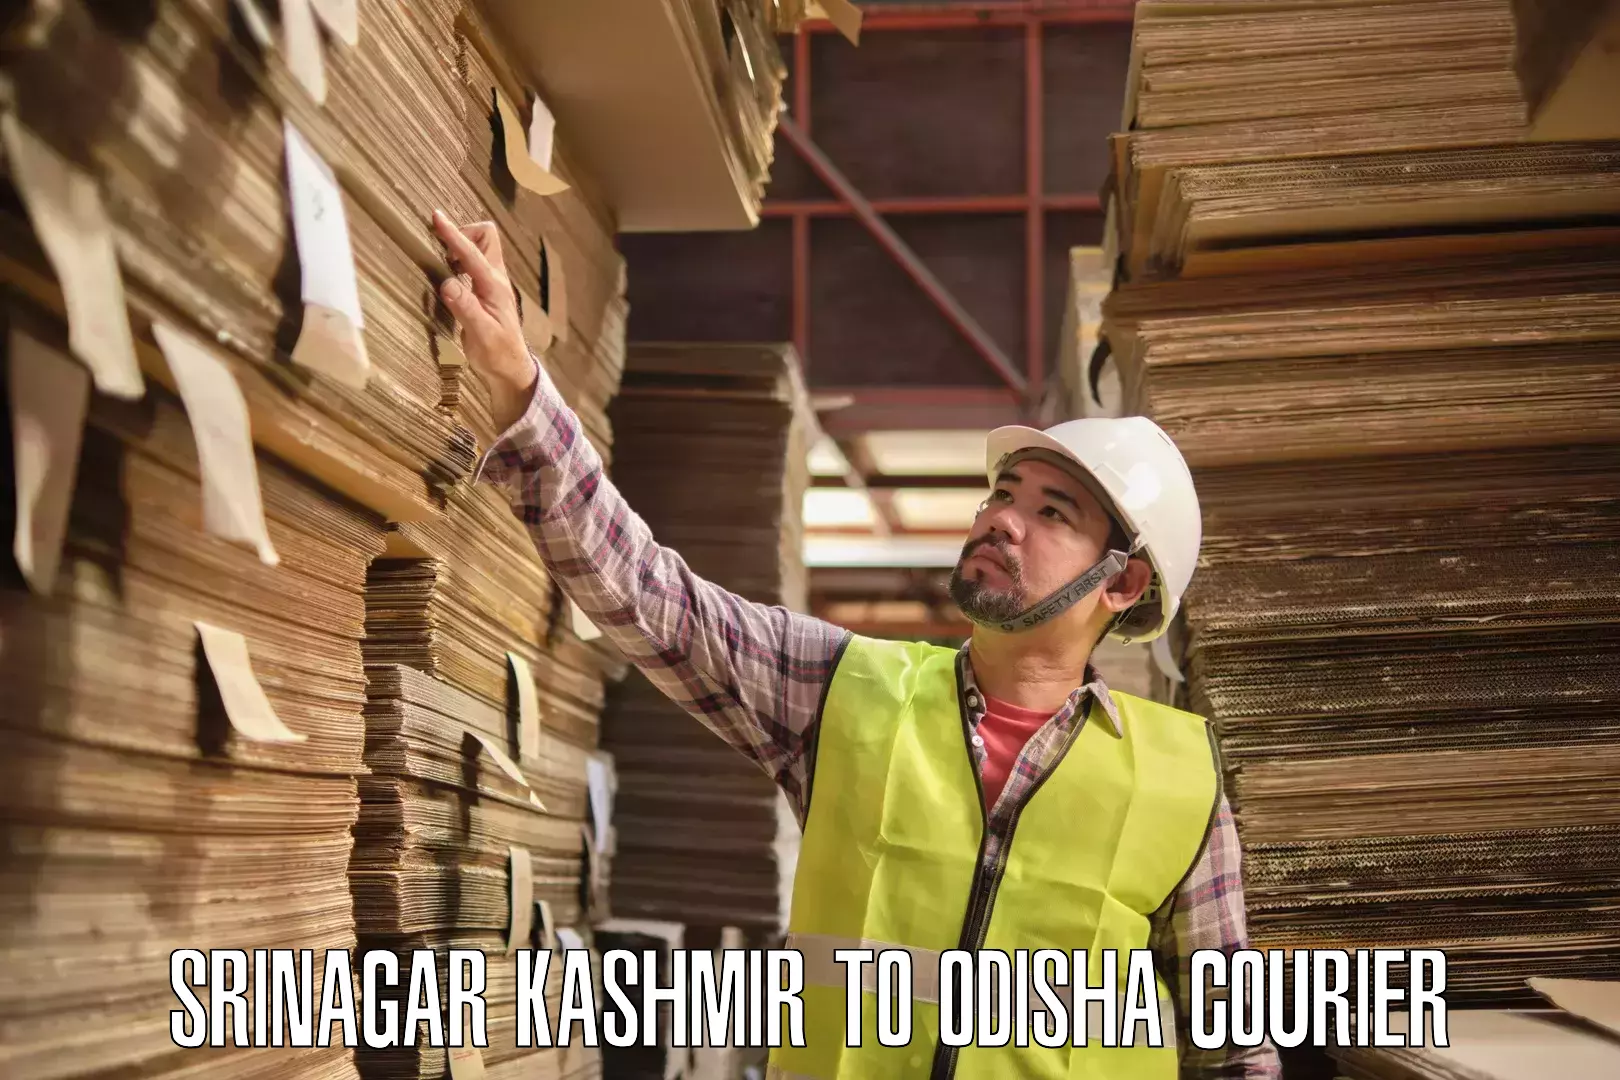 Full-service courier options Srinagar Kashmir to Chandikhol